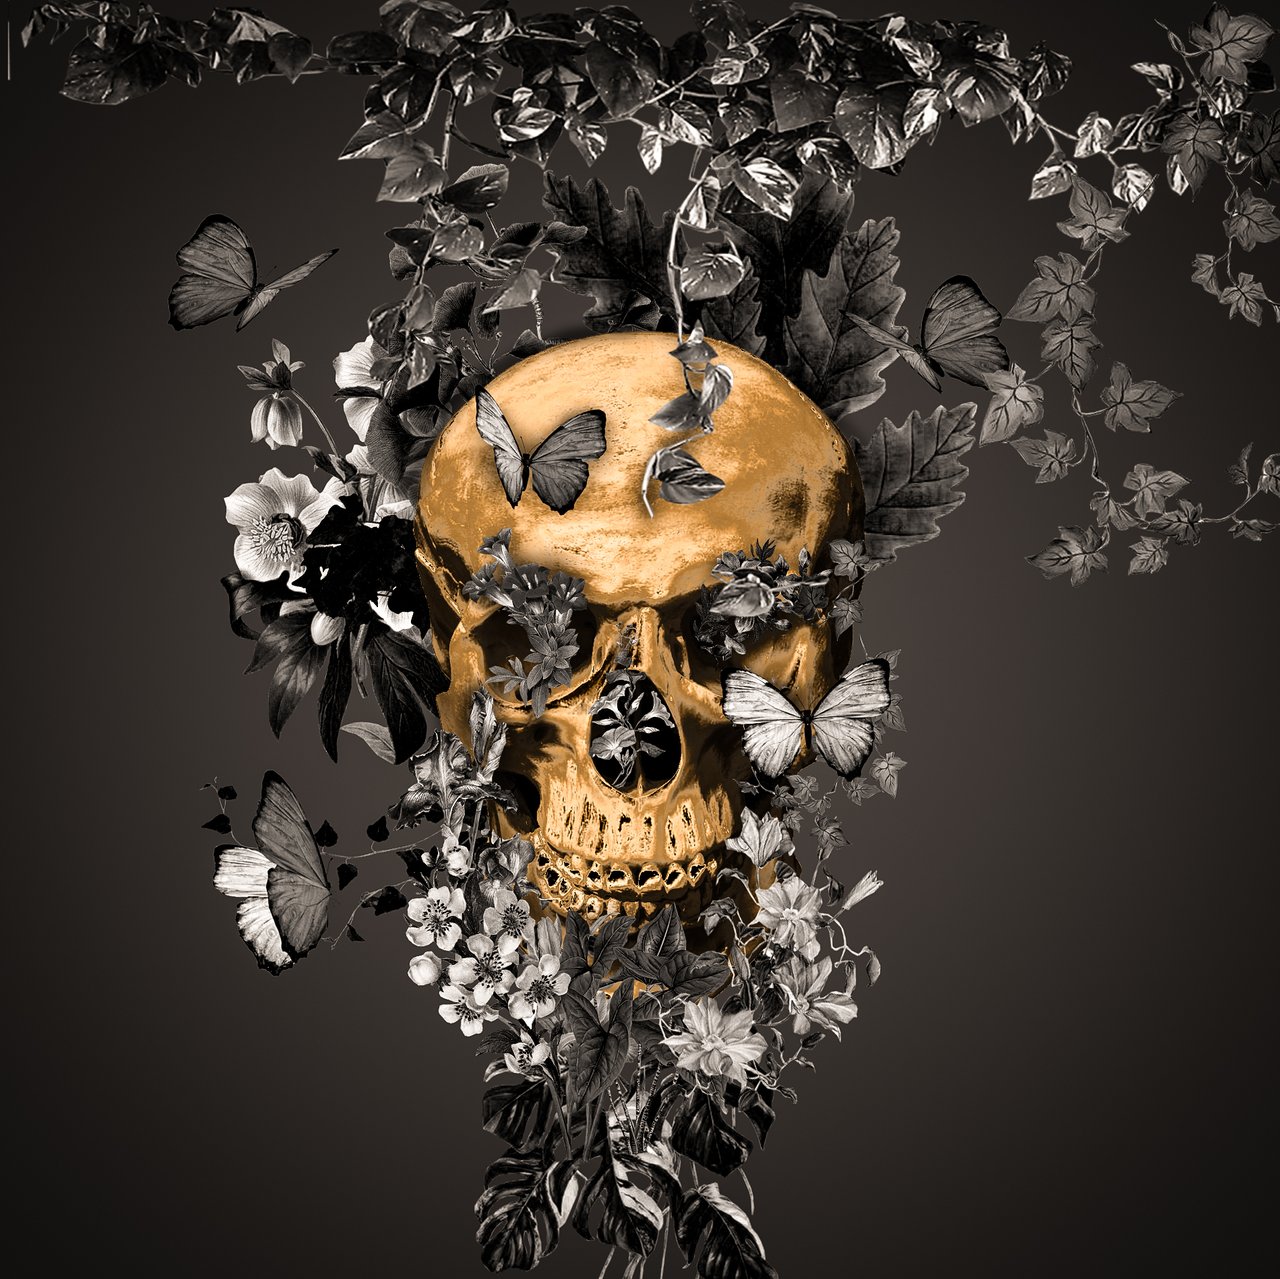 Skull Made Of Gold by slowaiart on DeviantArt